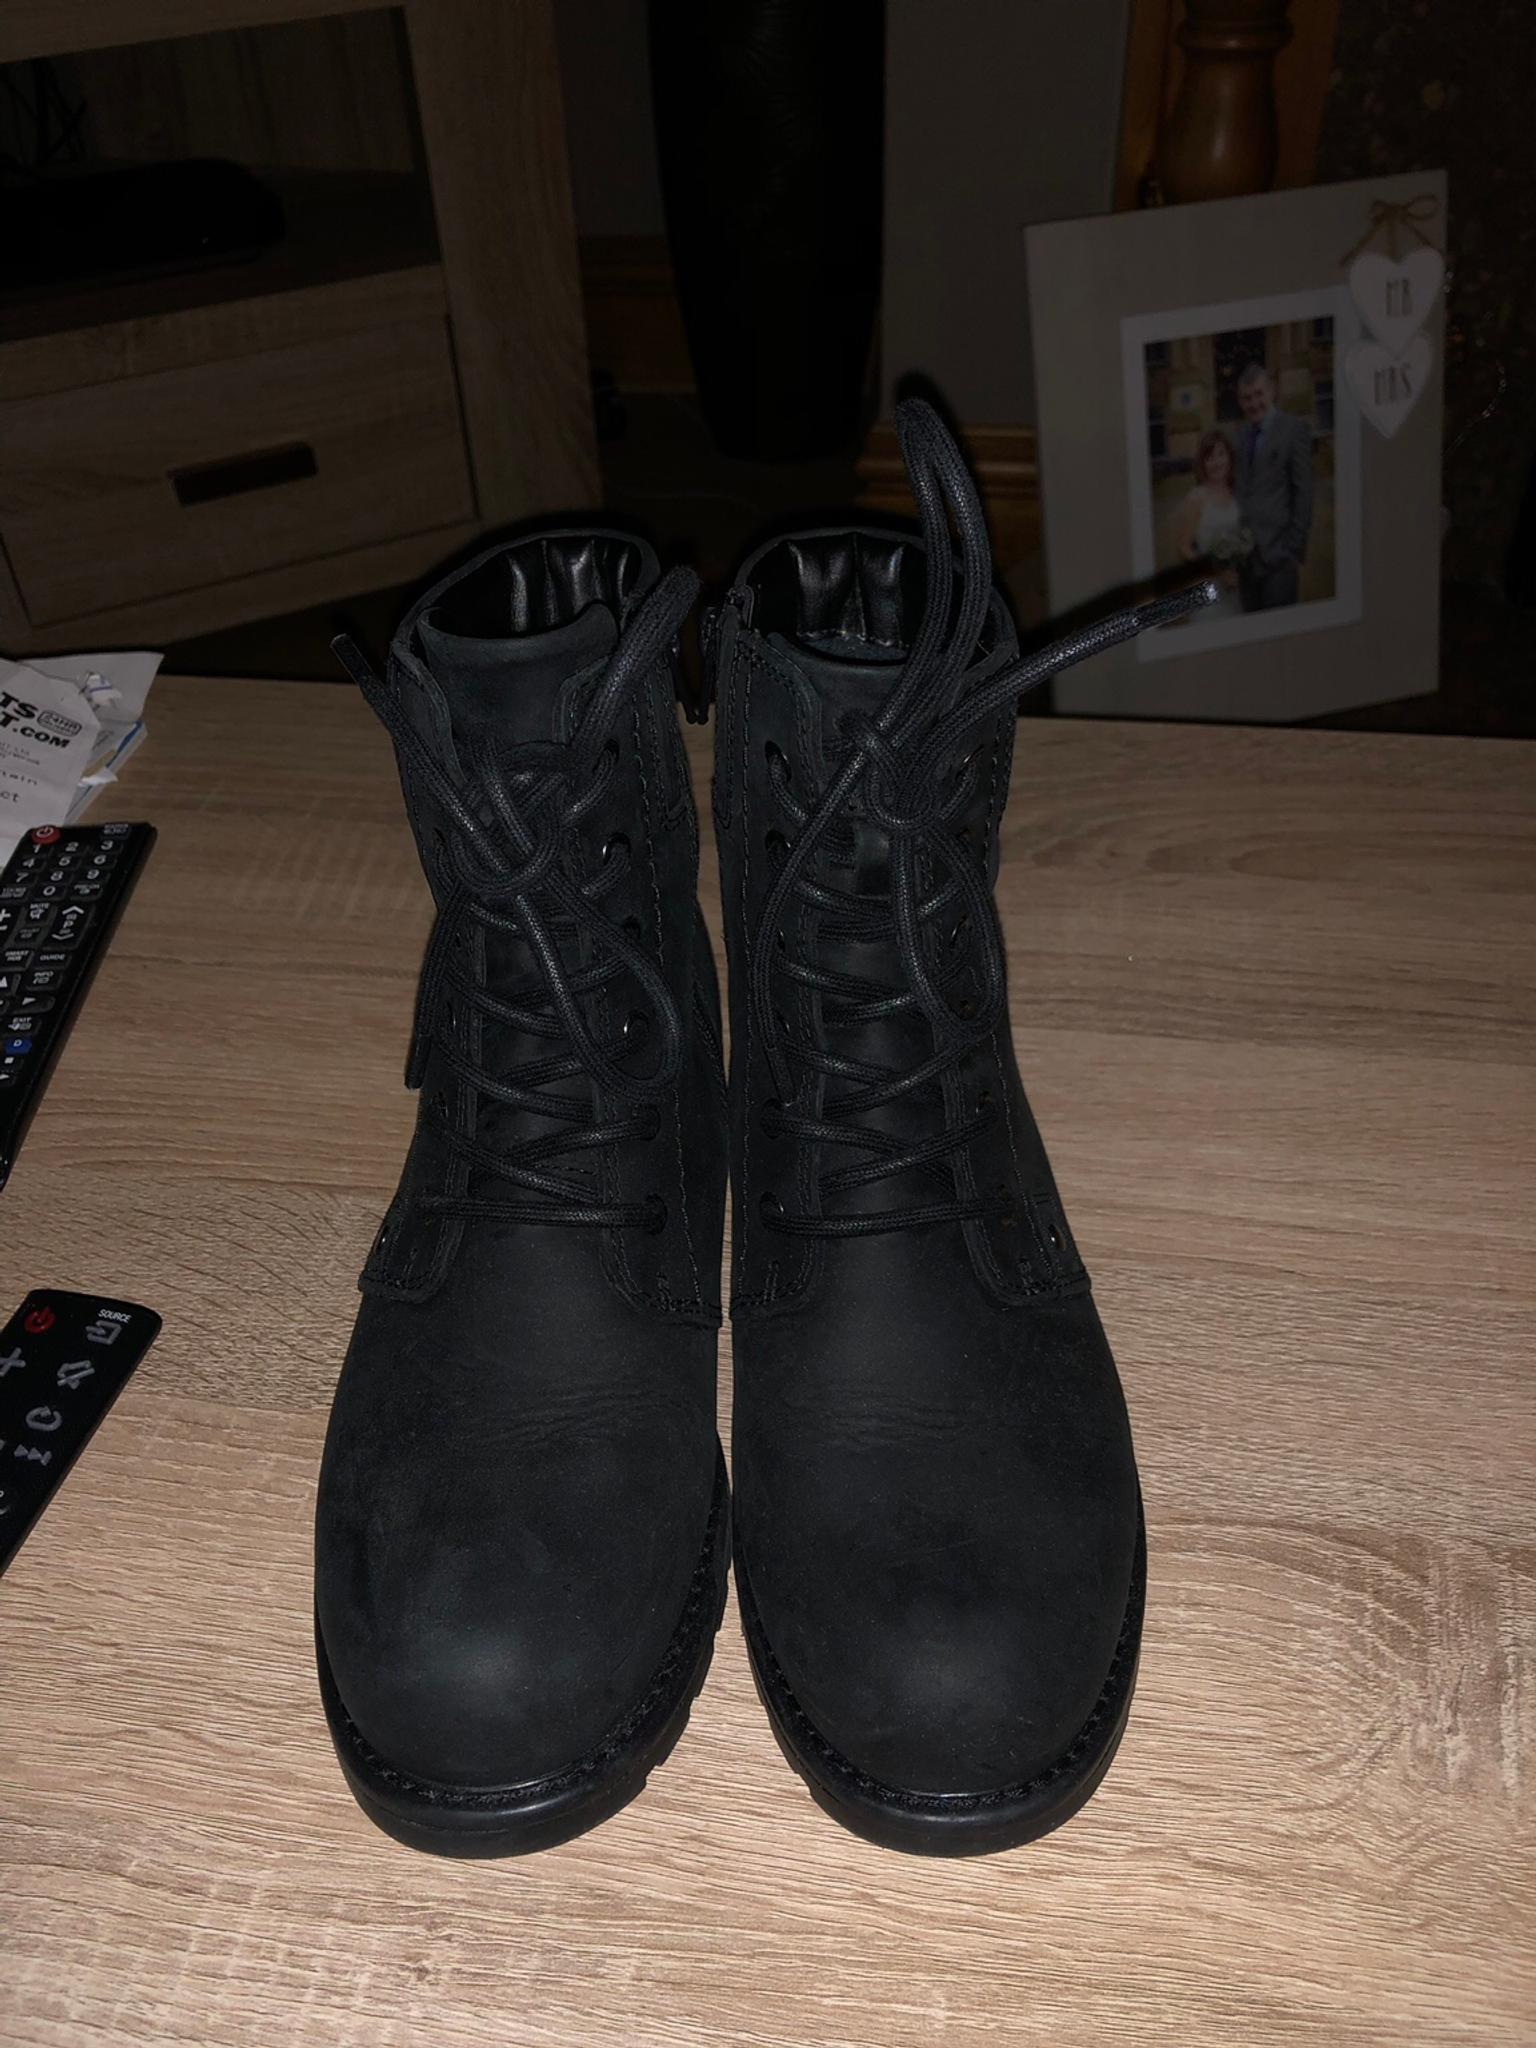 orinoco spice clarks boots